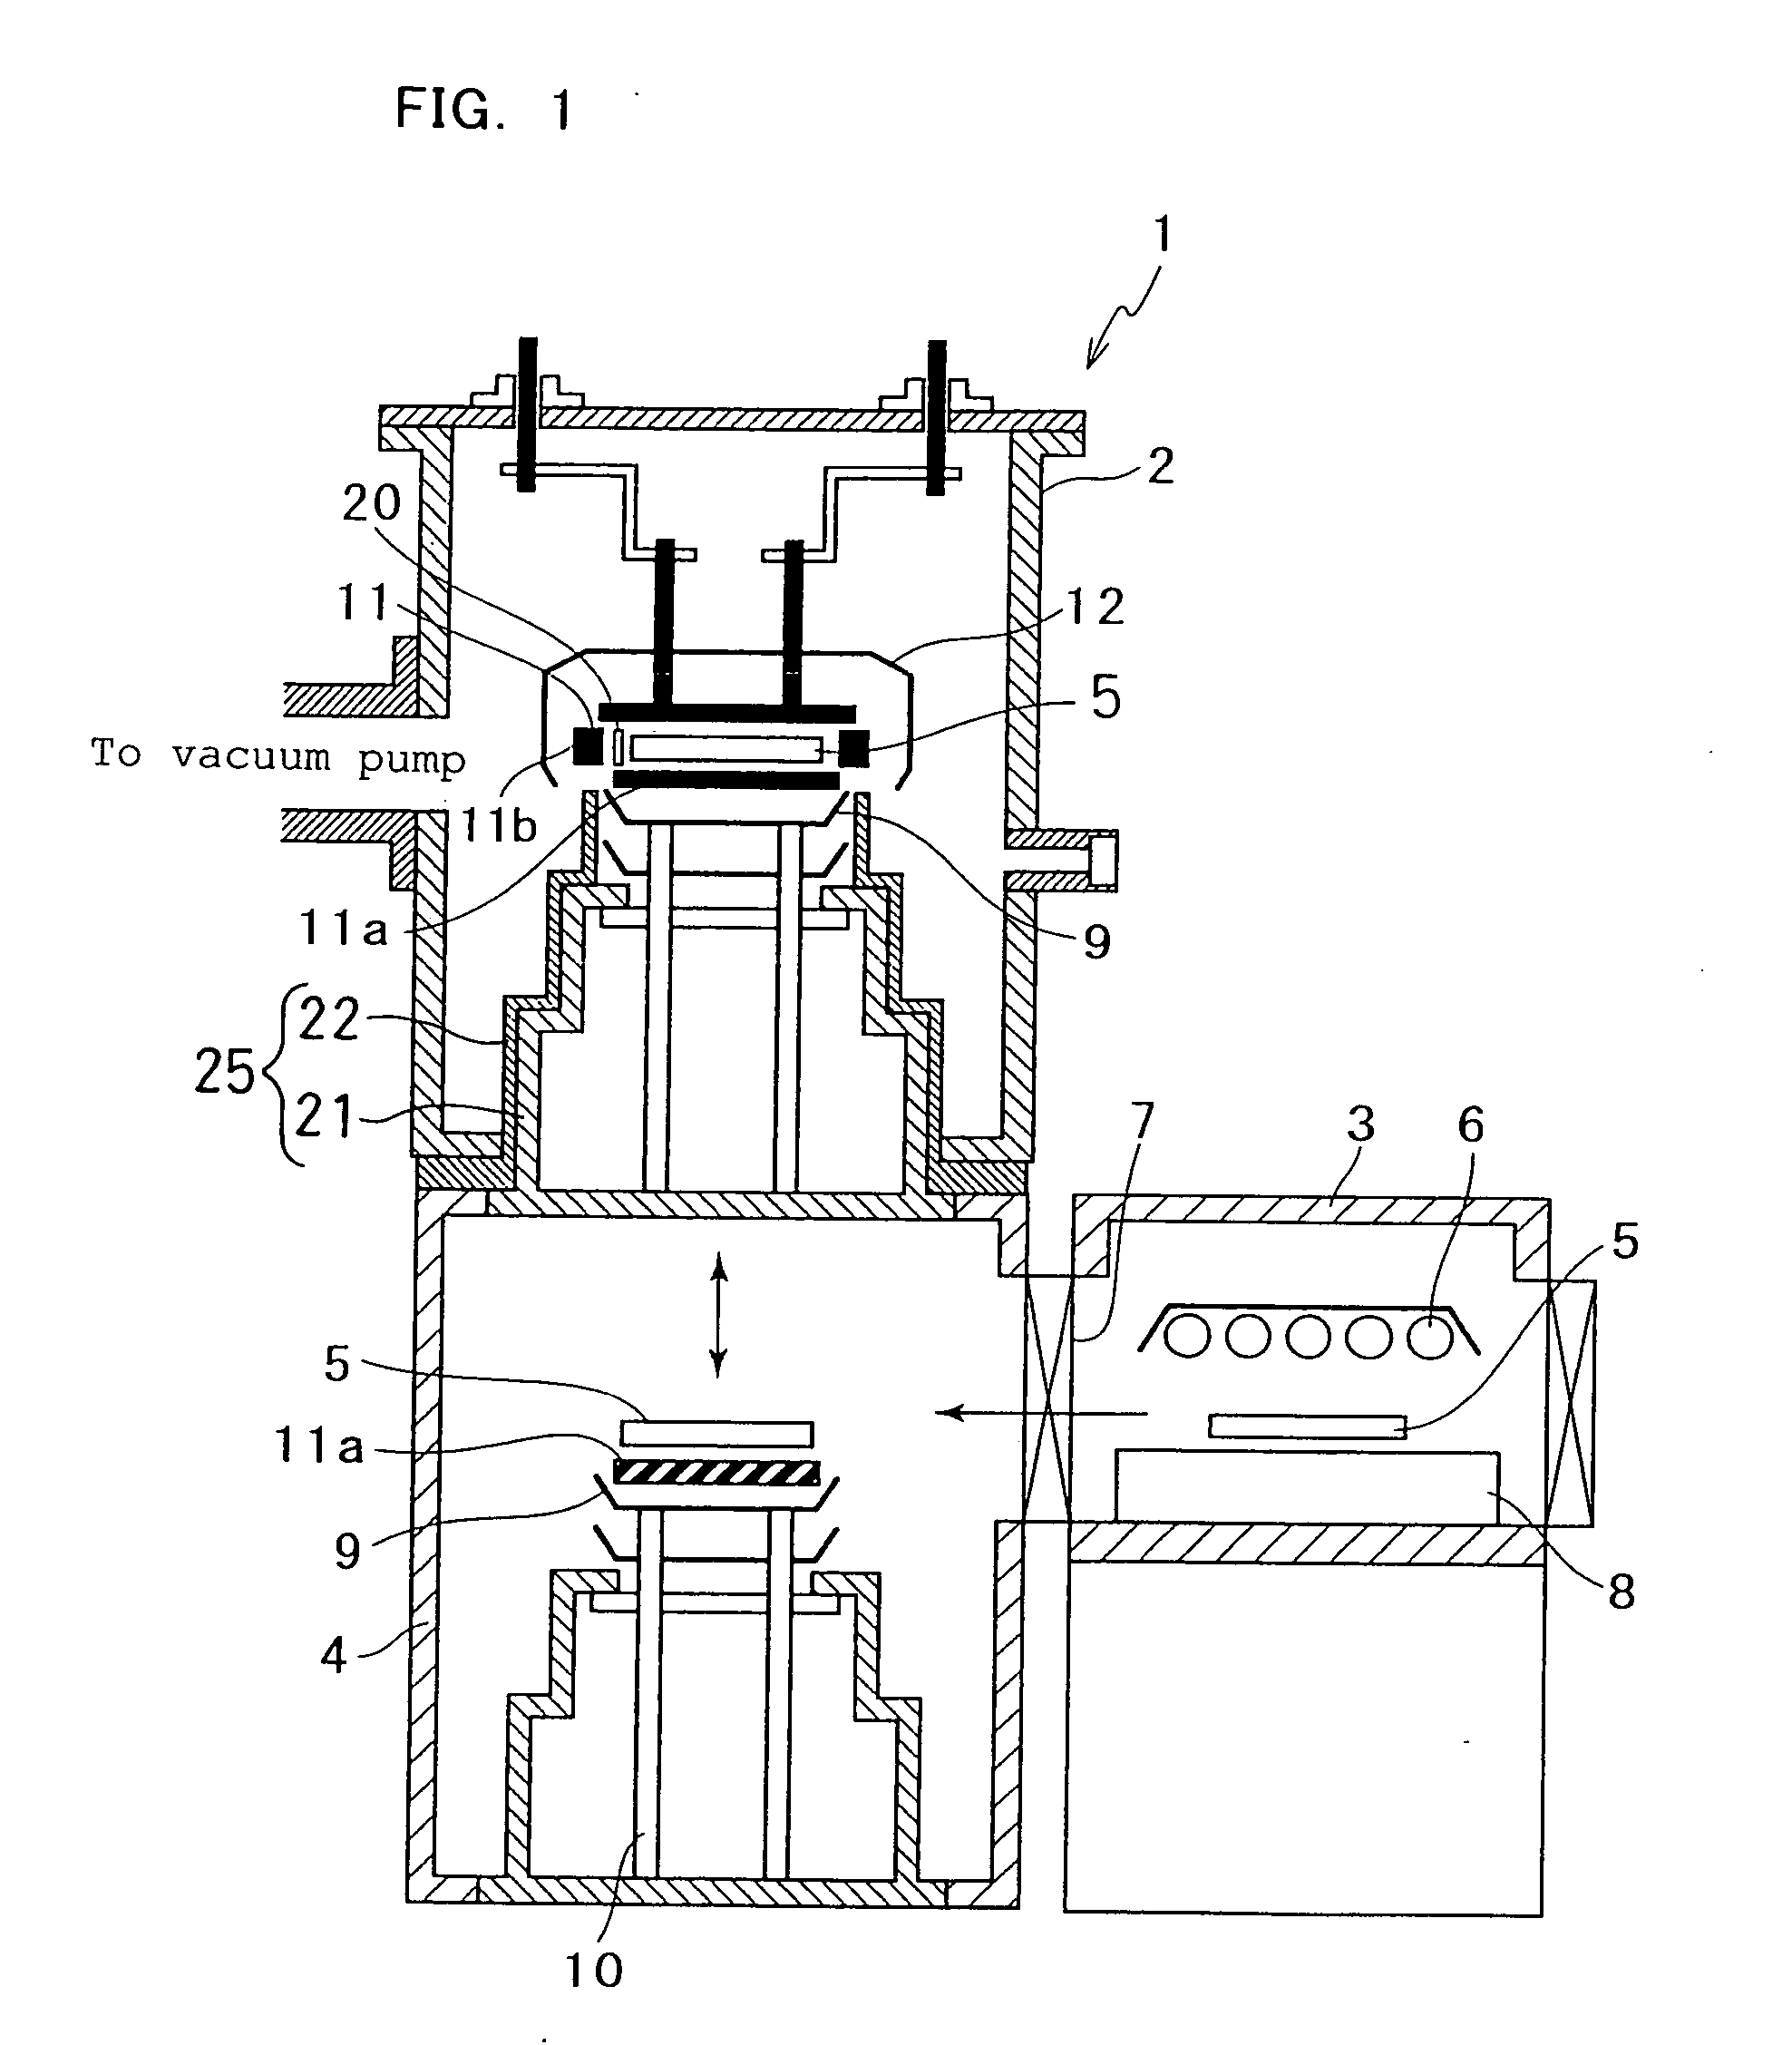 Method of heat treatment and heat treatment apparatus